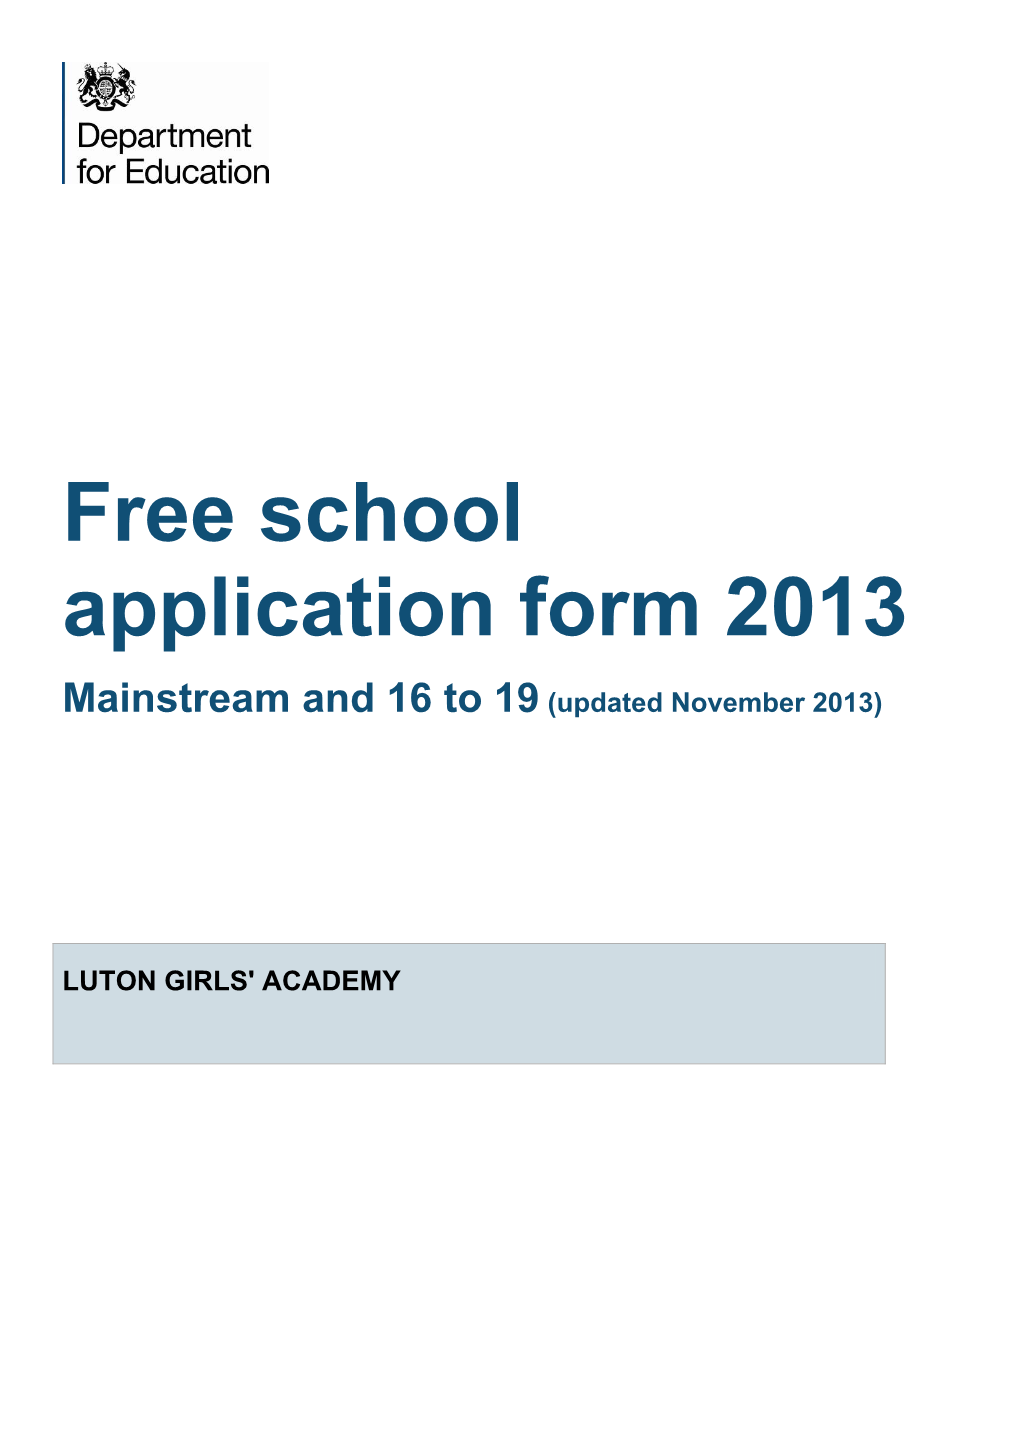 Luton Girls' Academy